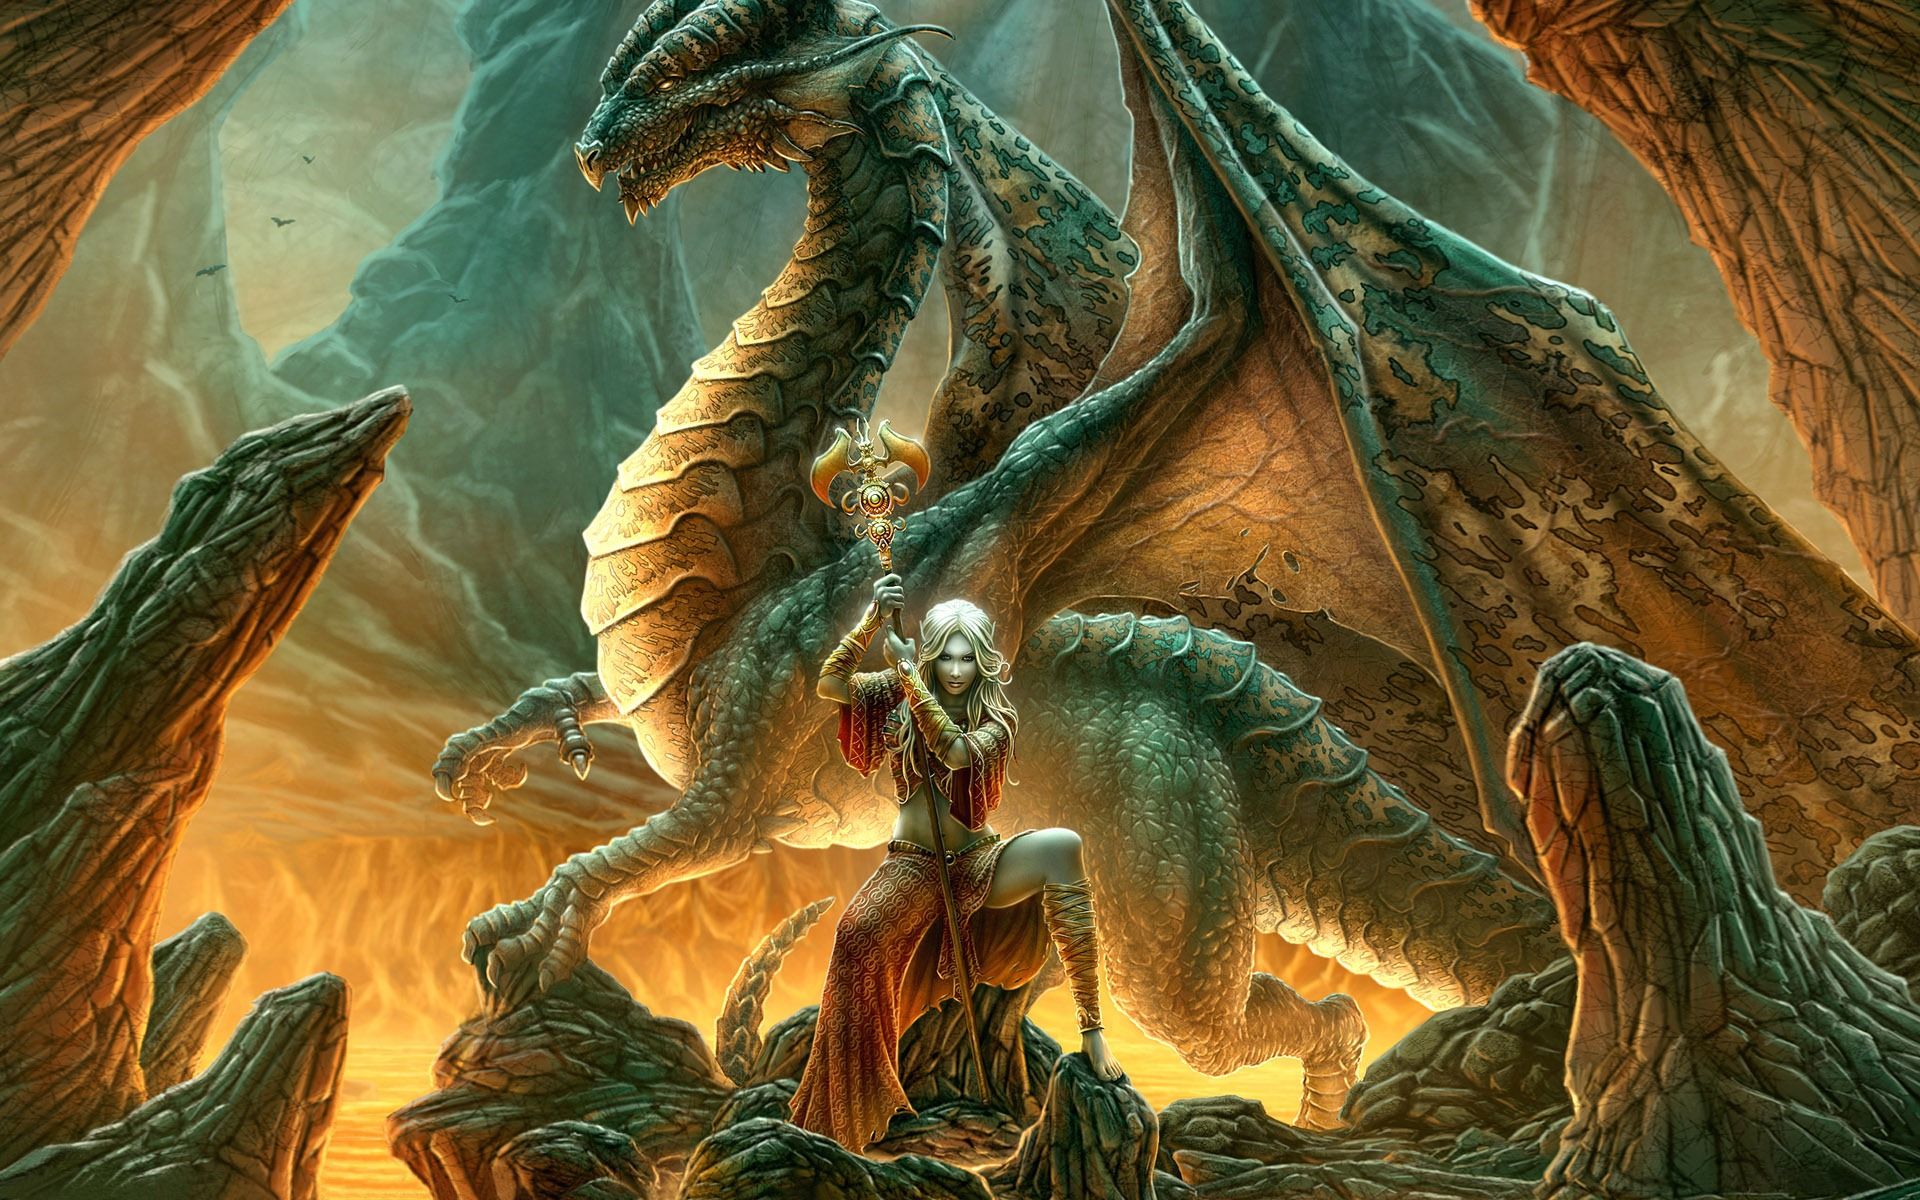 Woman and Dragon Wallpaper